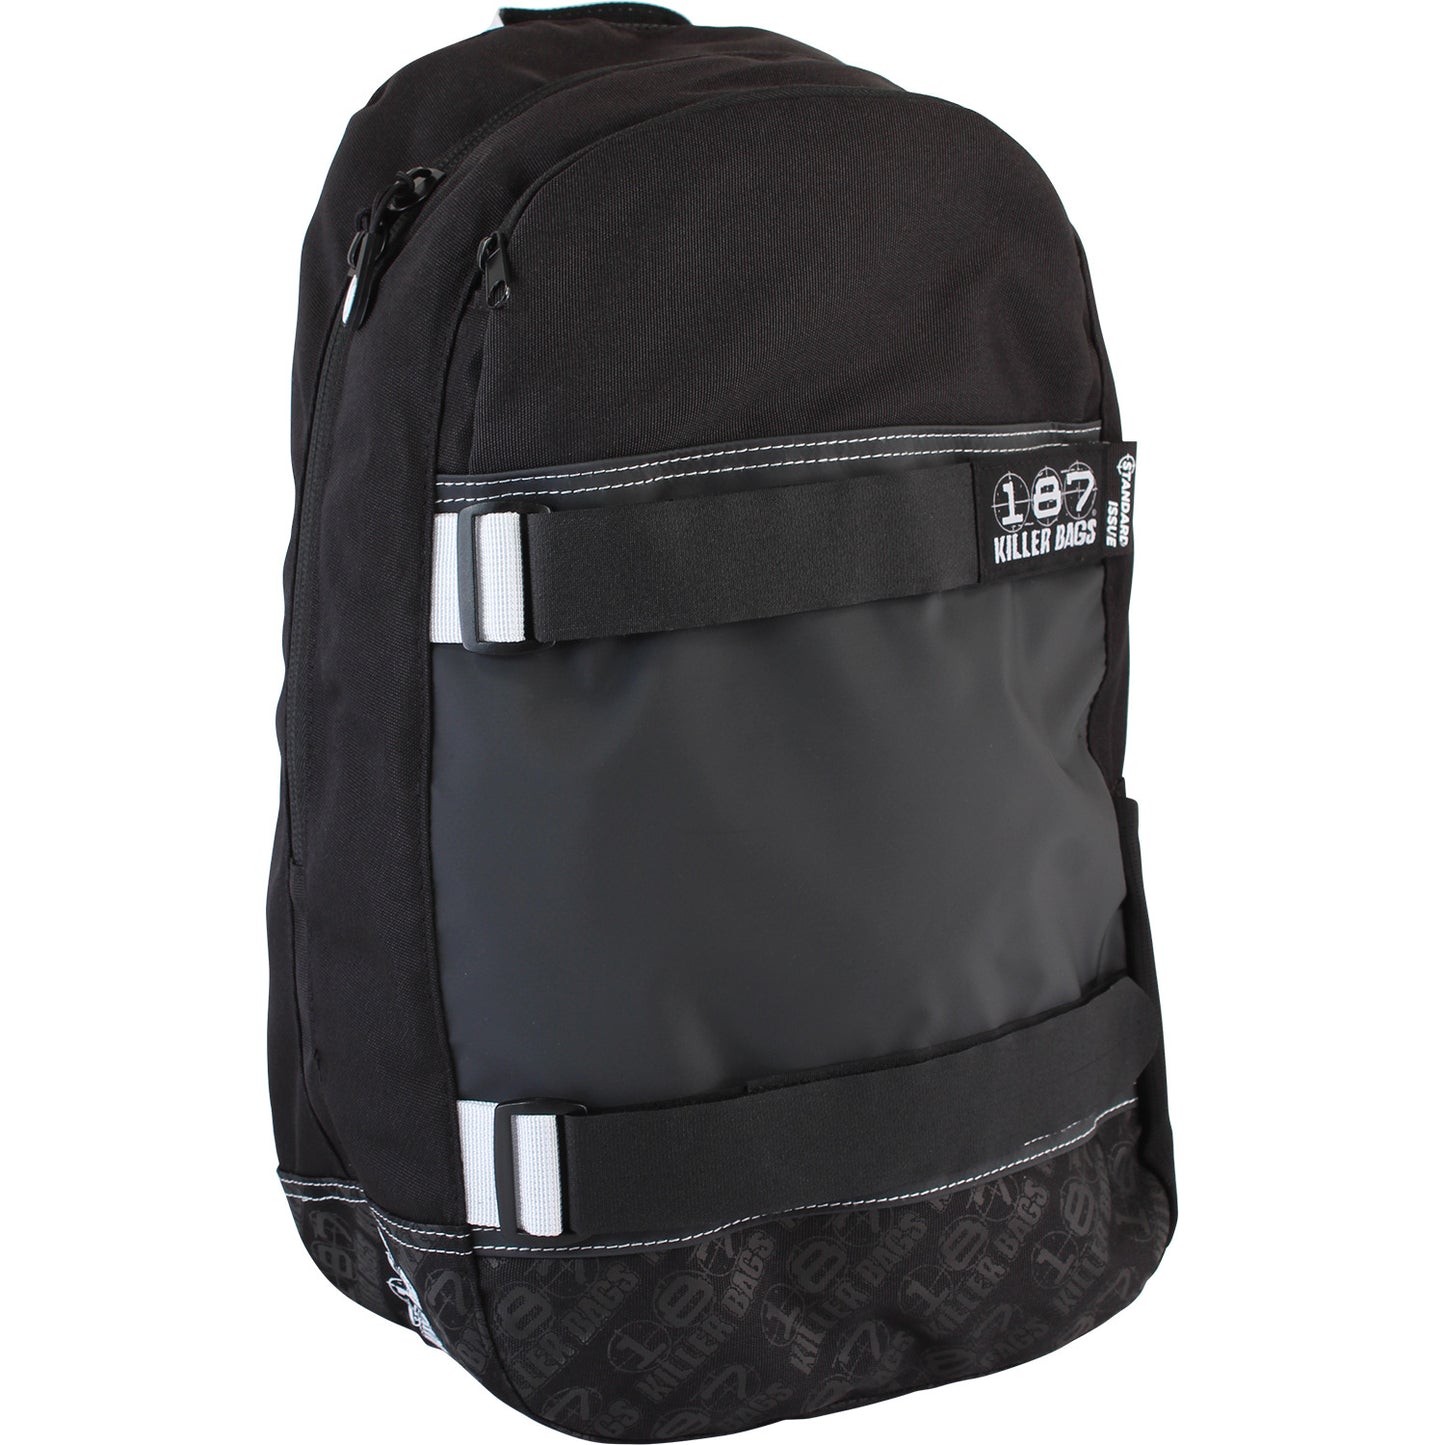 187 Killer Pads - Standard Issue Black Backpack